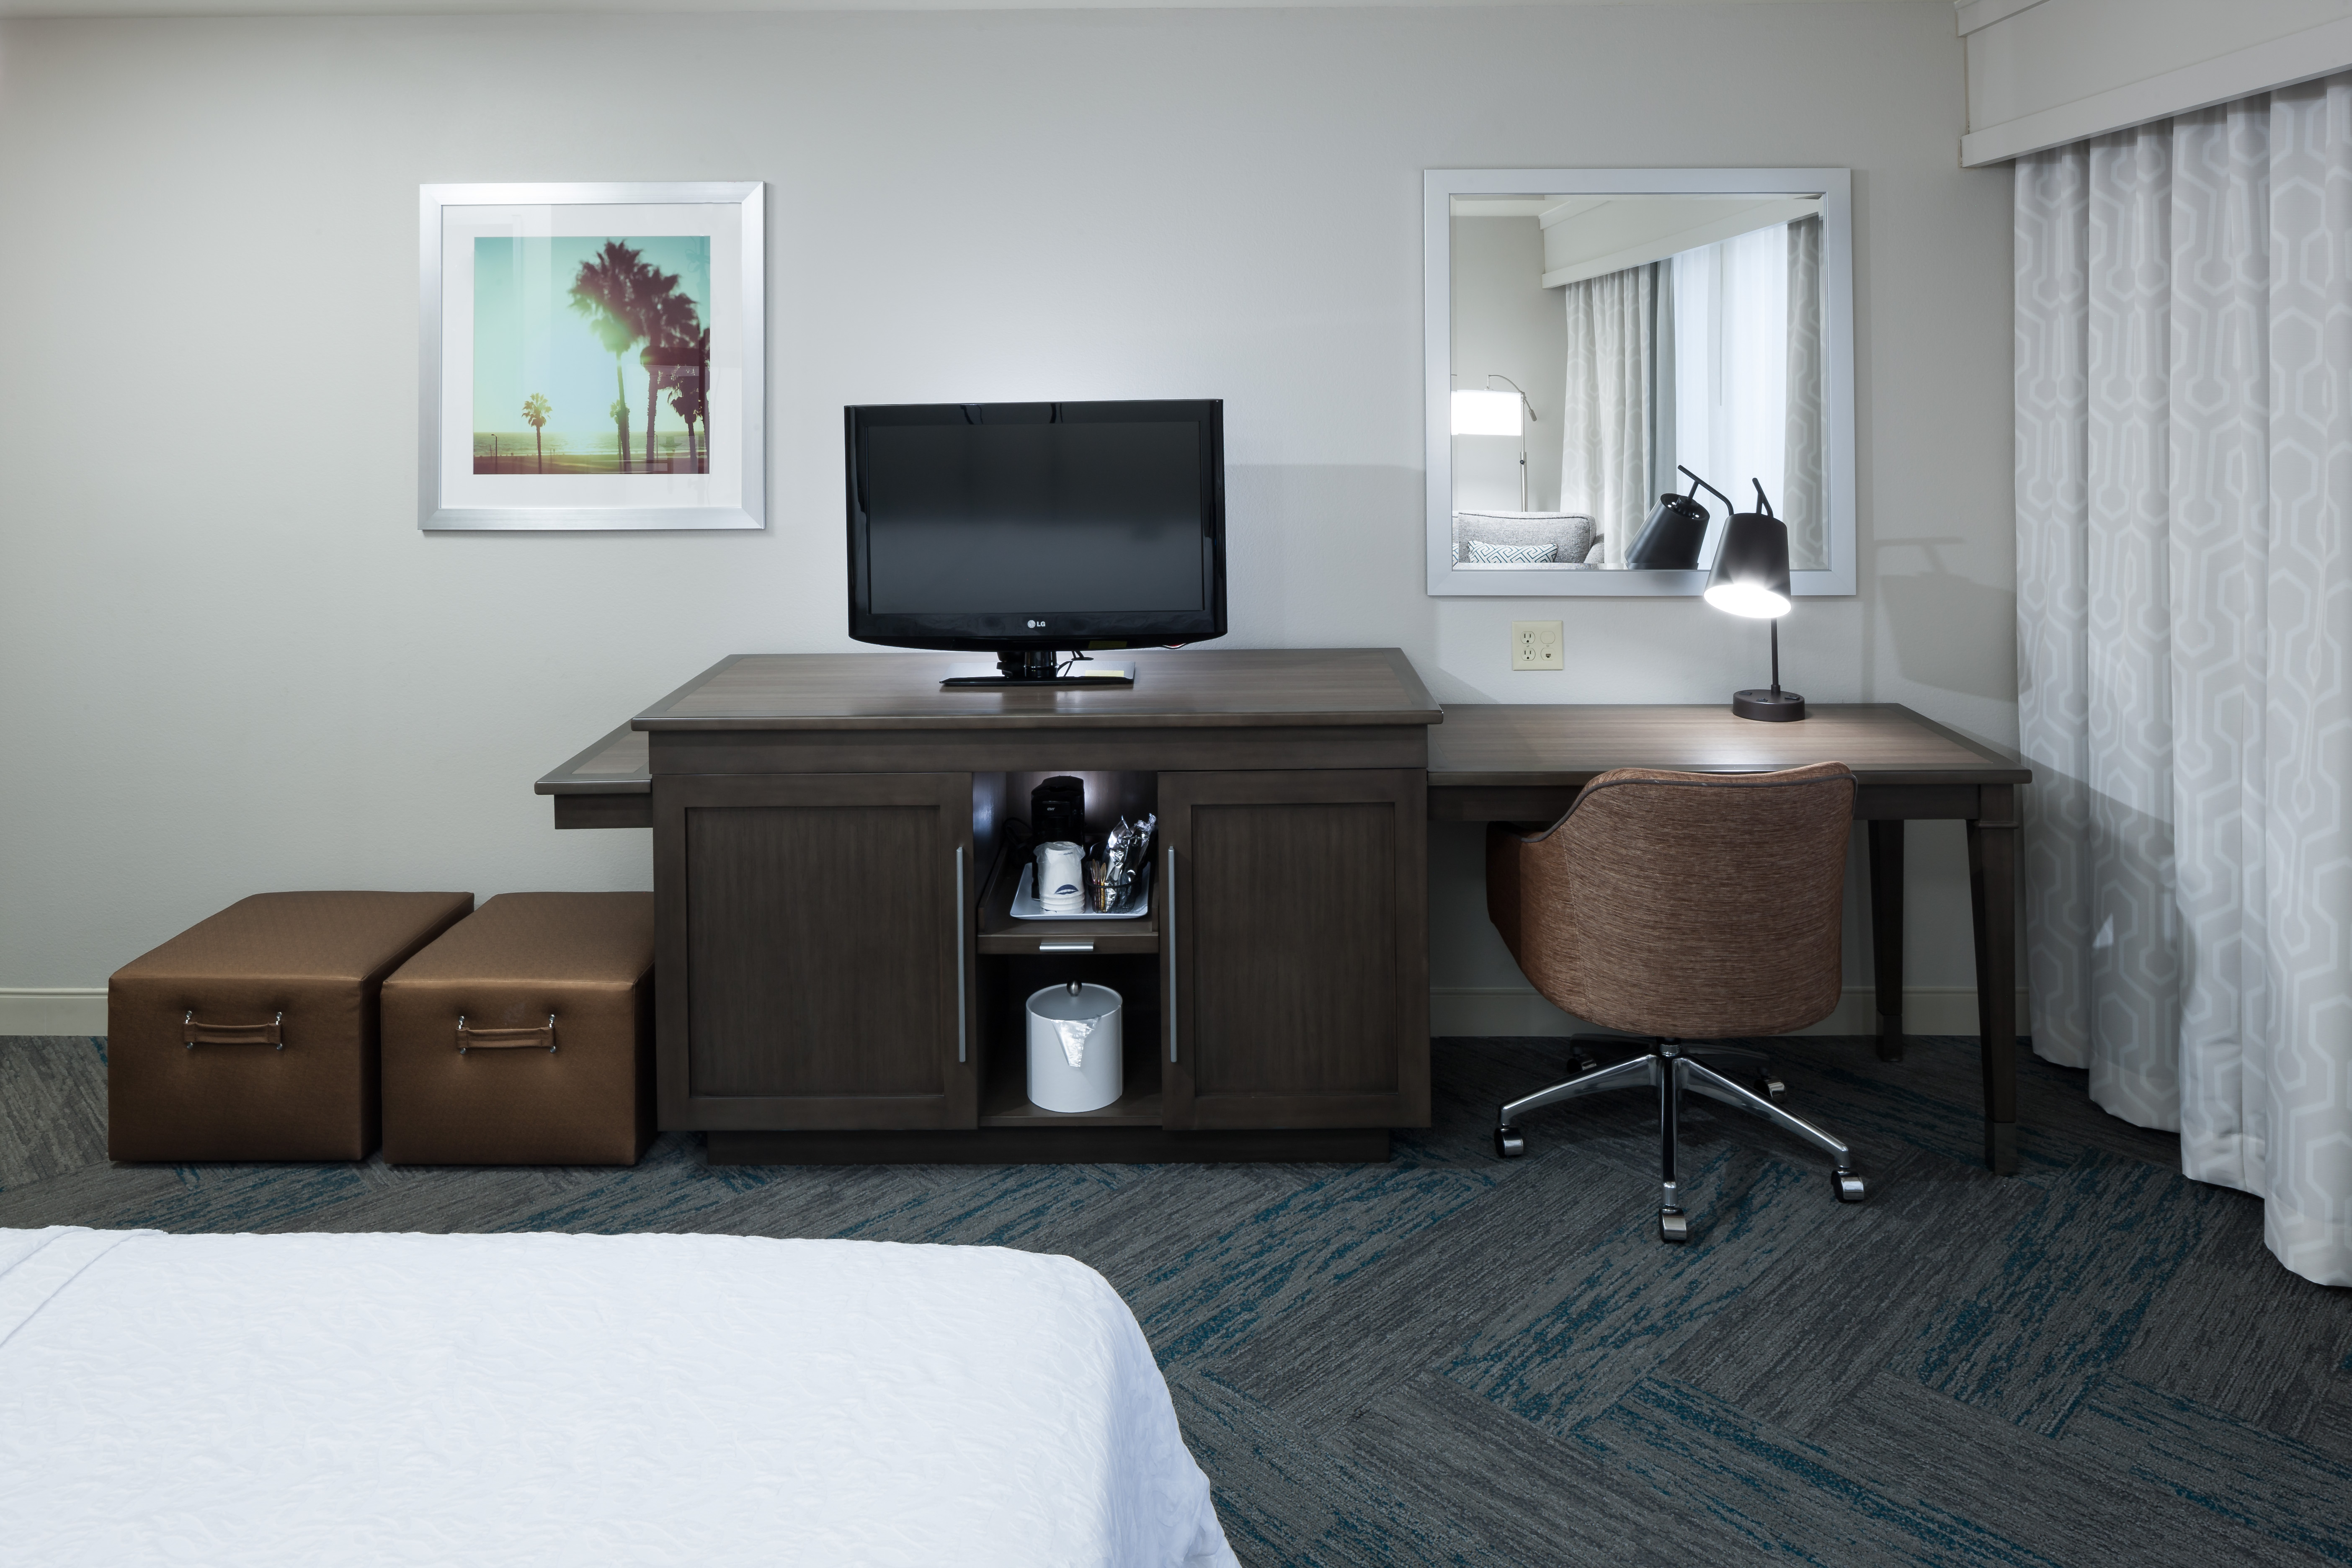 Bed Room With Work Desk & TV